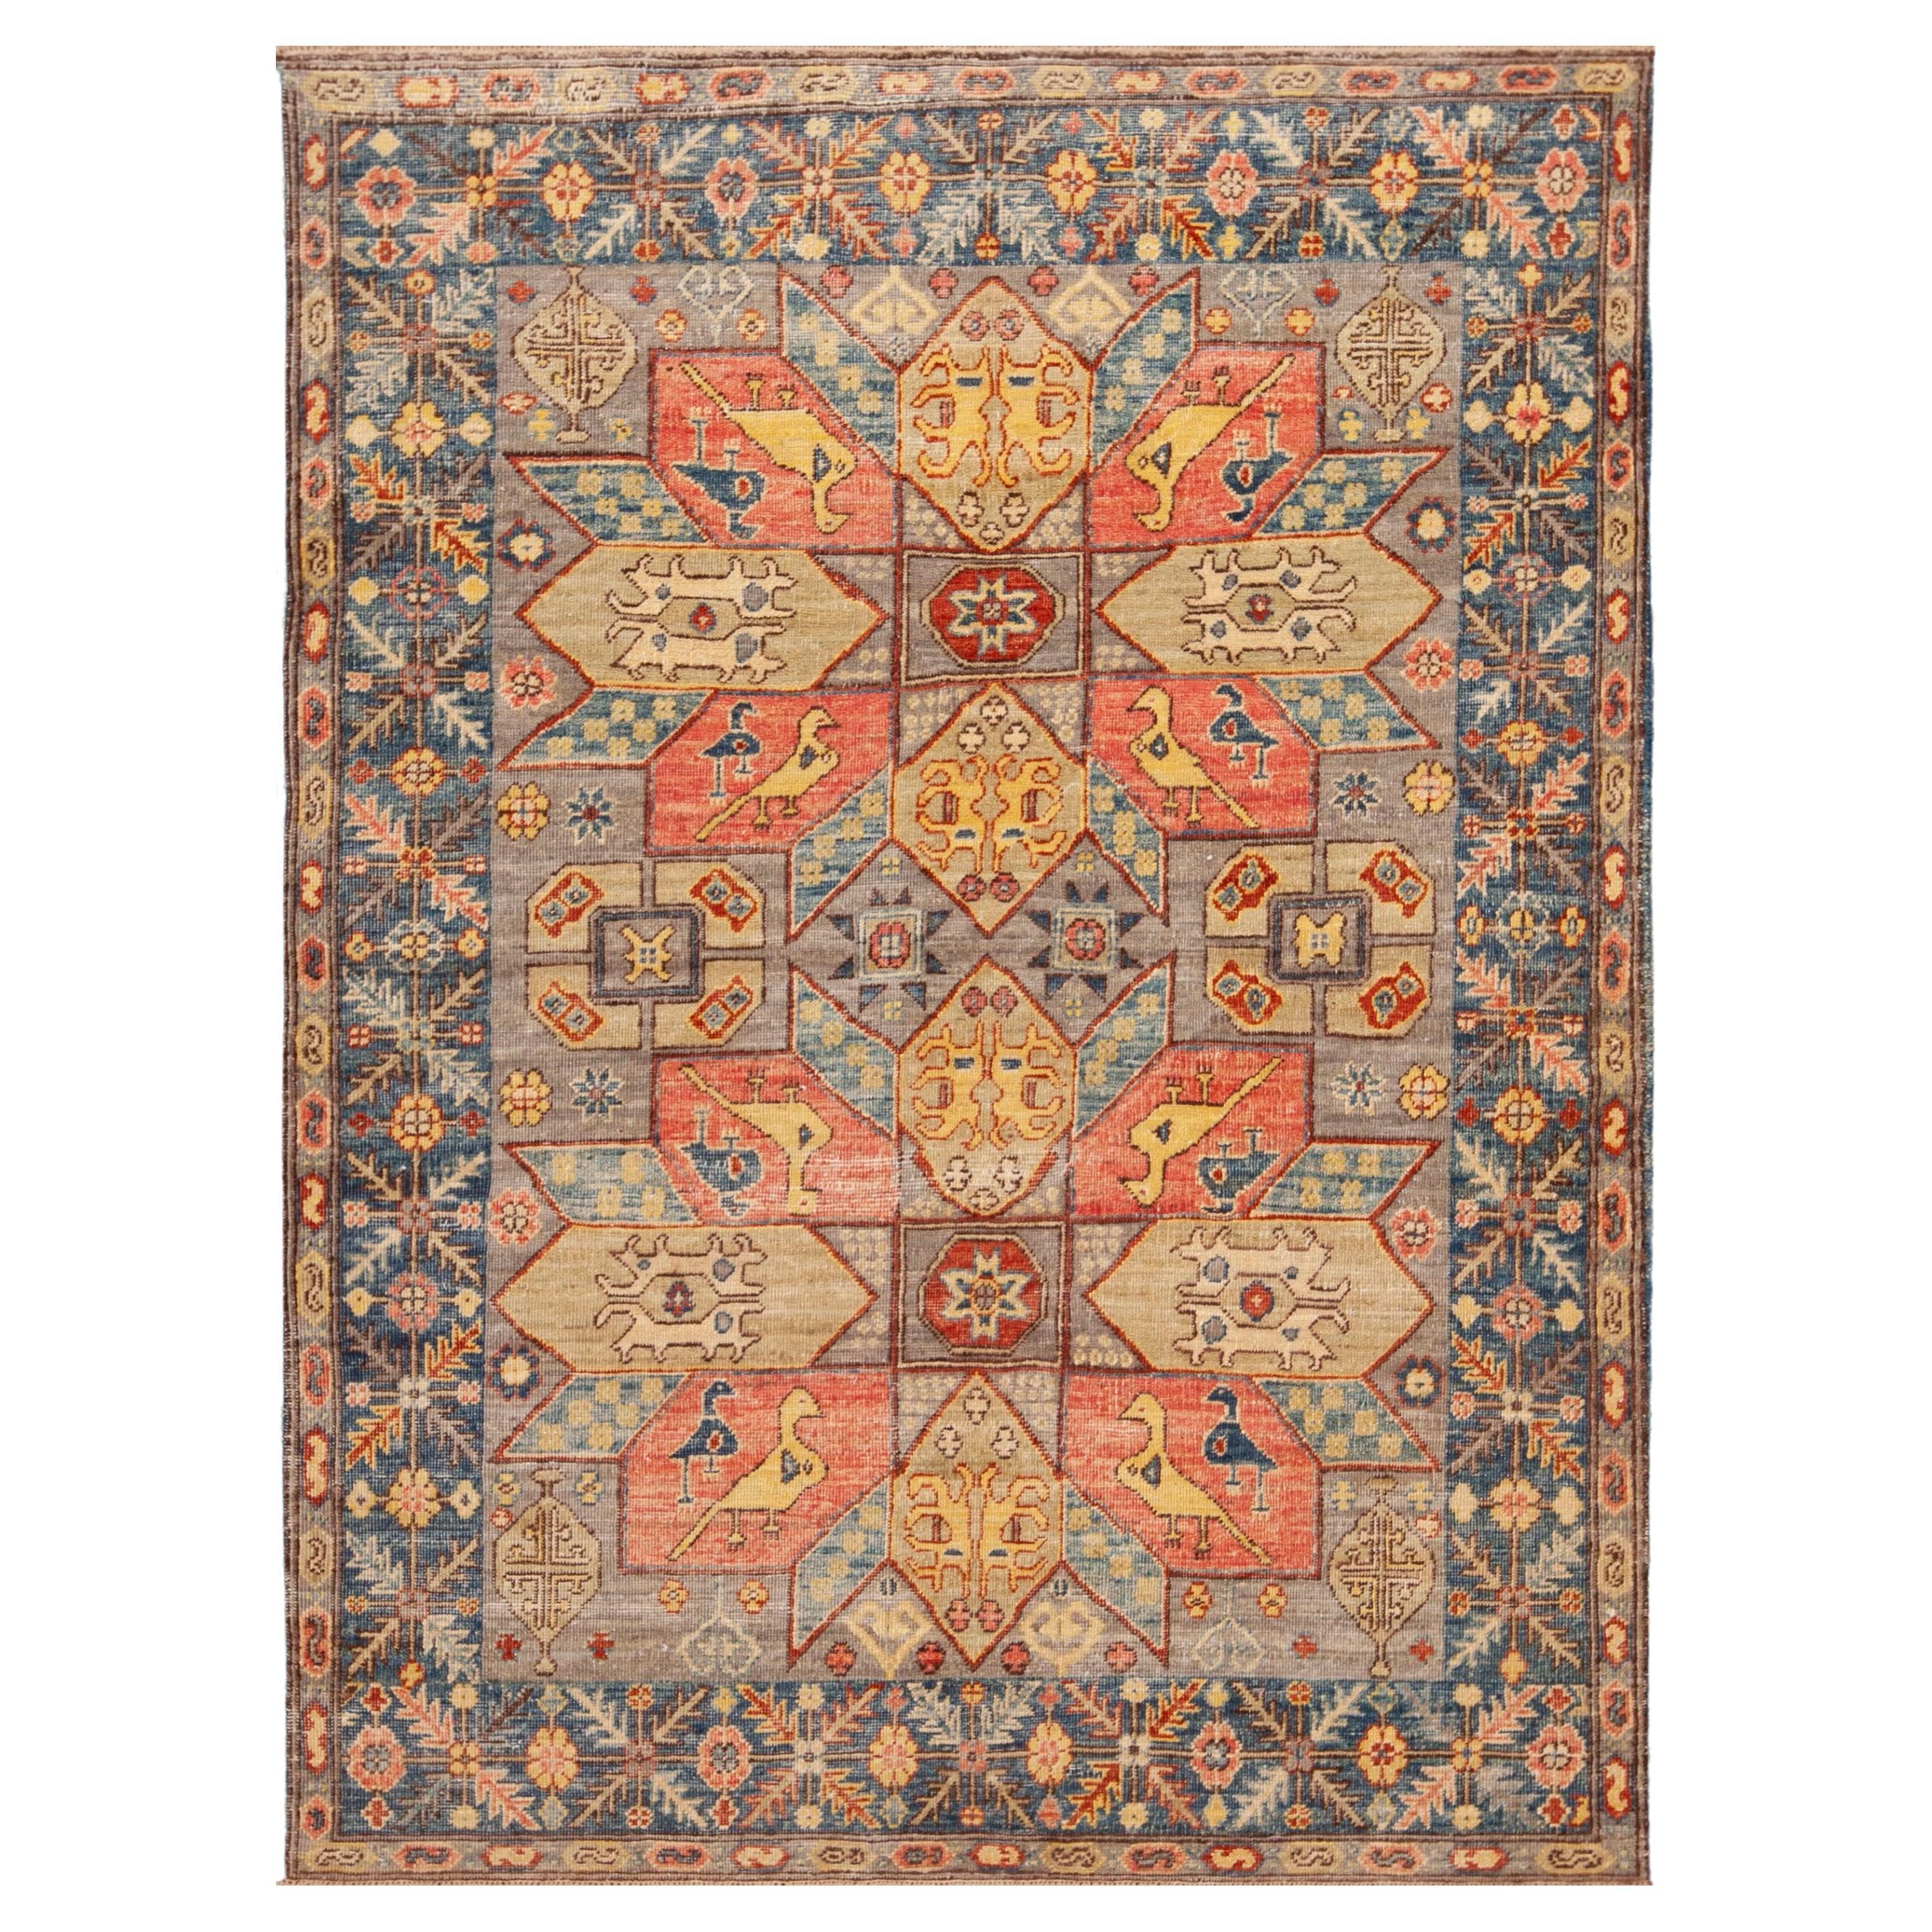 Nazmiyal Collection Rustic Color Tribal Geometric Modern Area Rug 4'4" x 5'10"